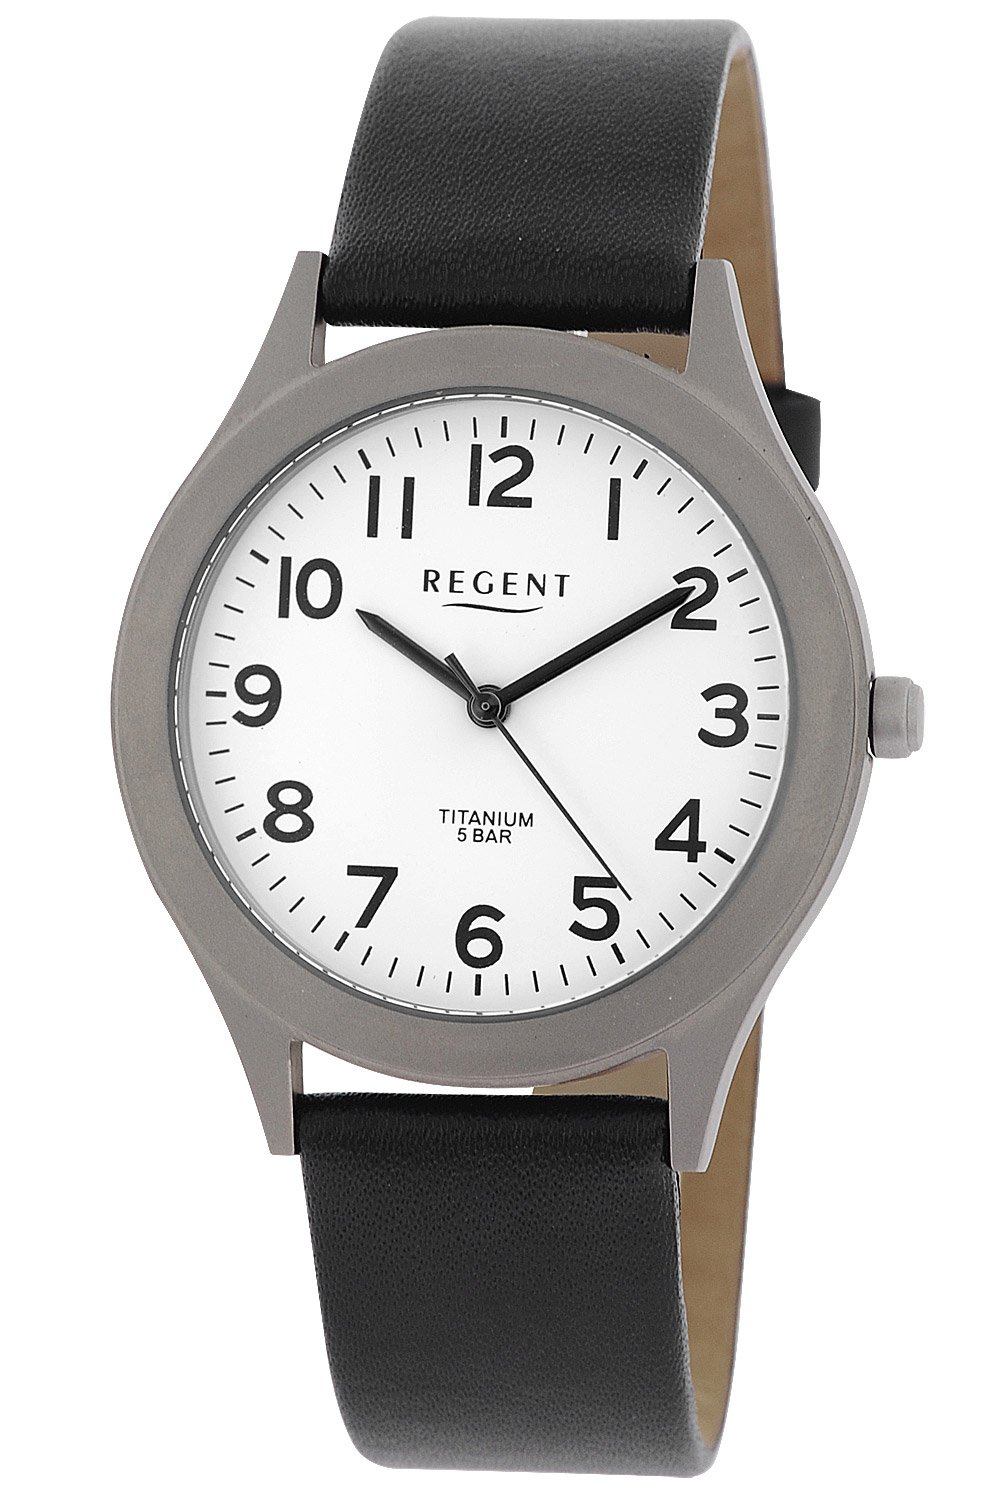 Regent • Titanium Men\'s with Strap F-842 Leather Watch uhrcenter